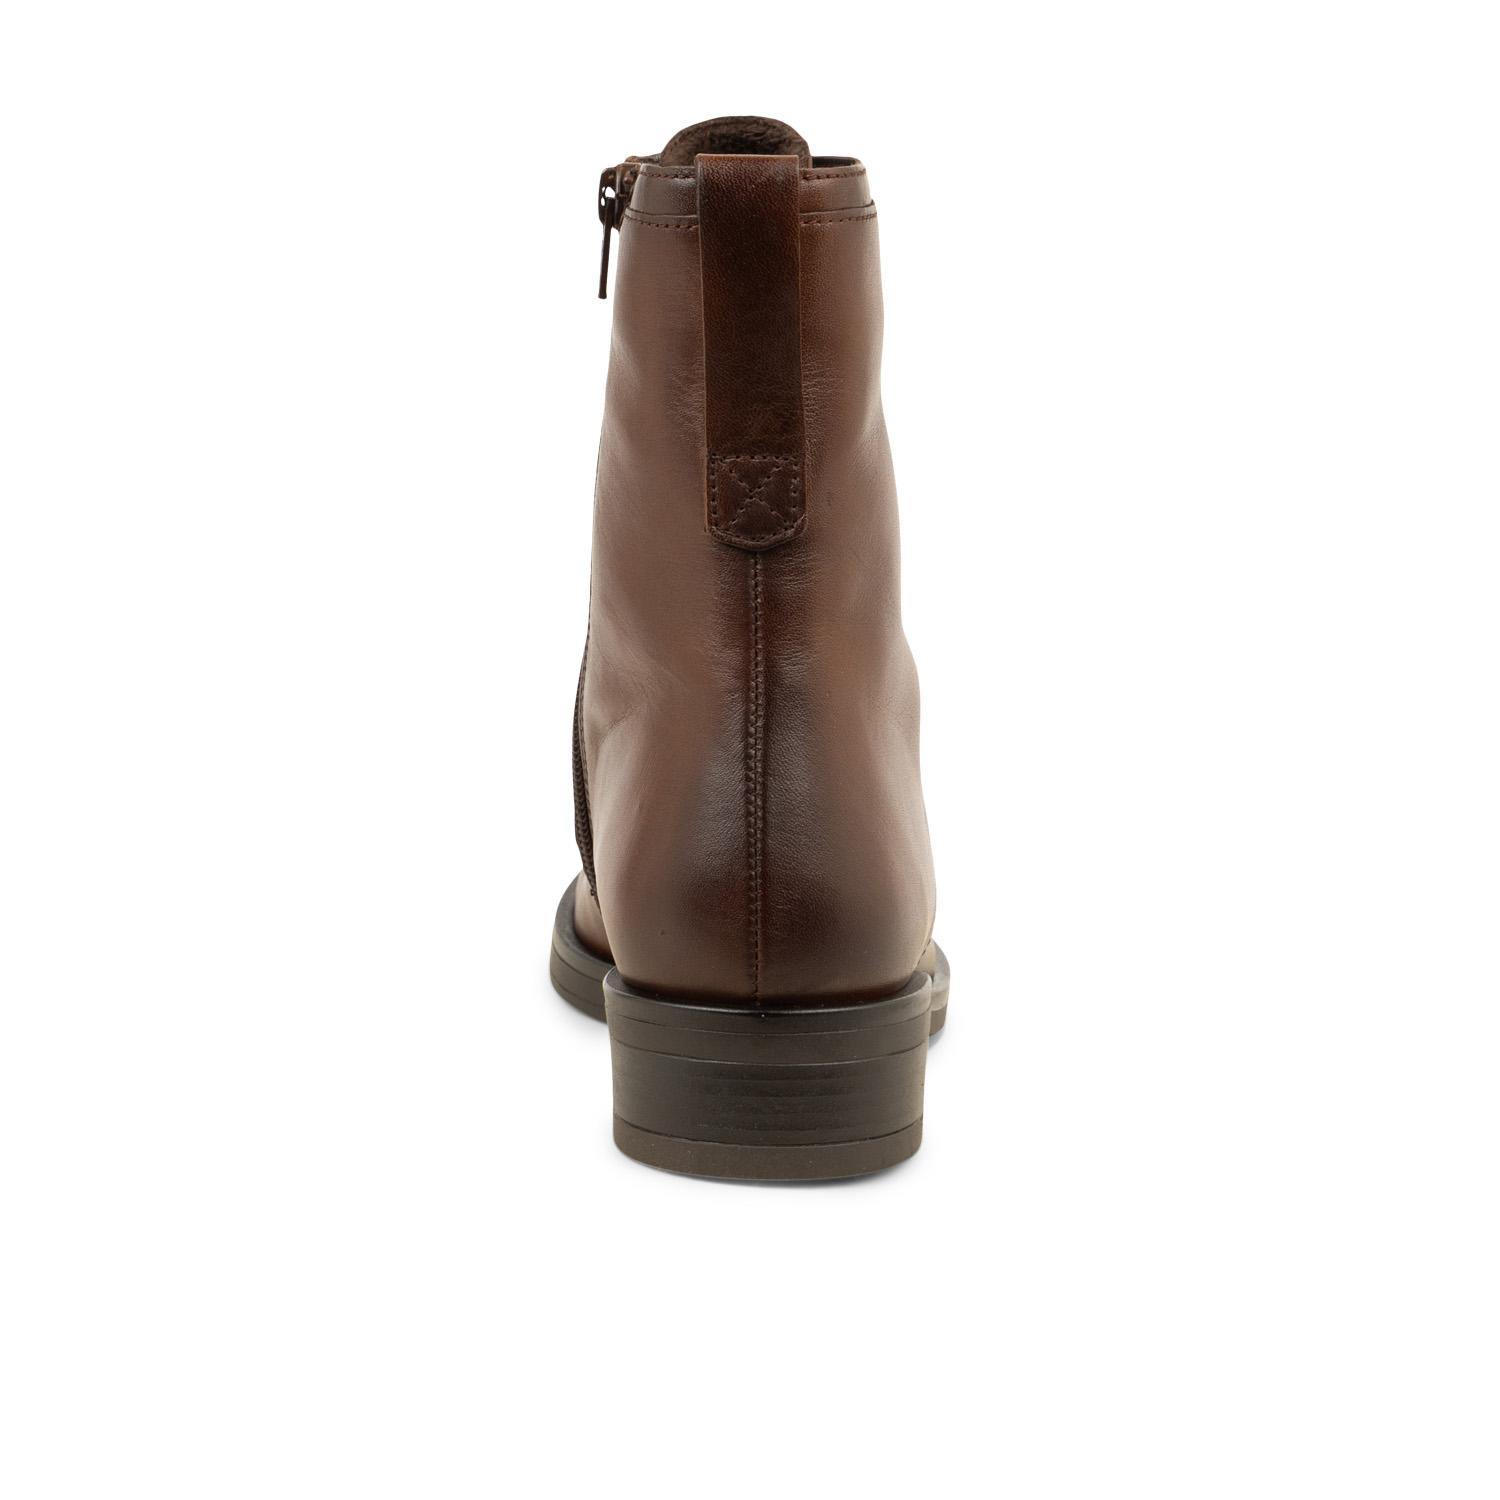 03 - GAPOLA - GABOR - Boots et bottines - Cuir